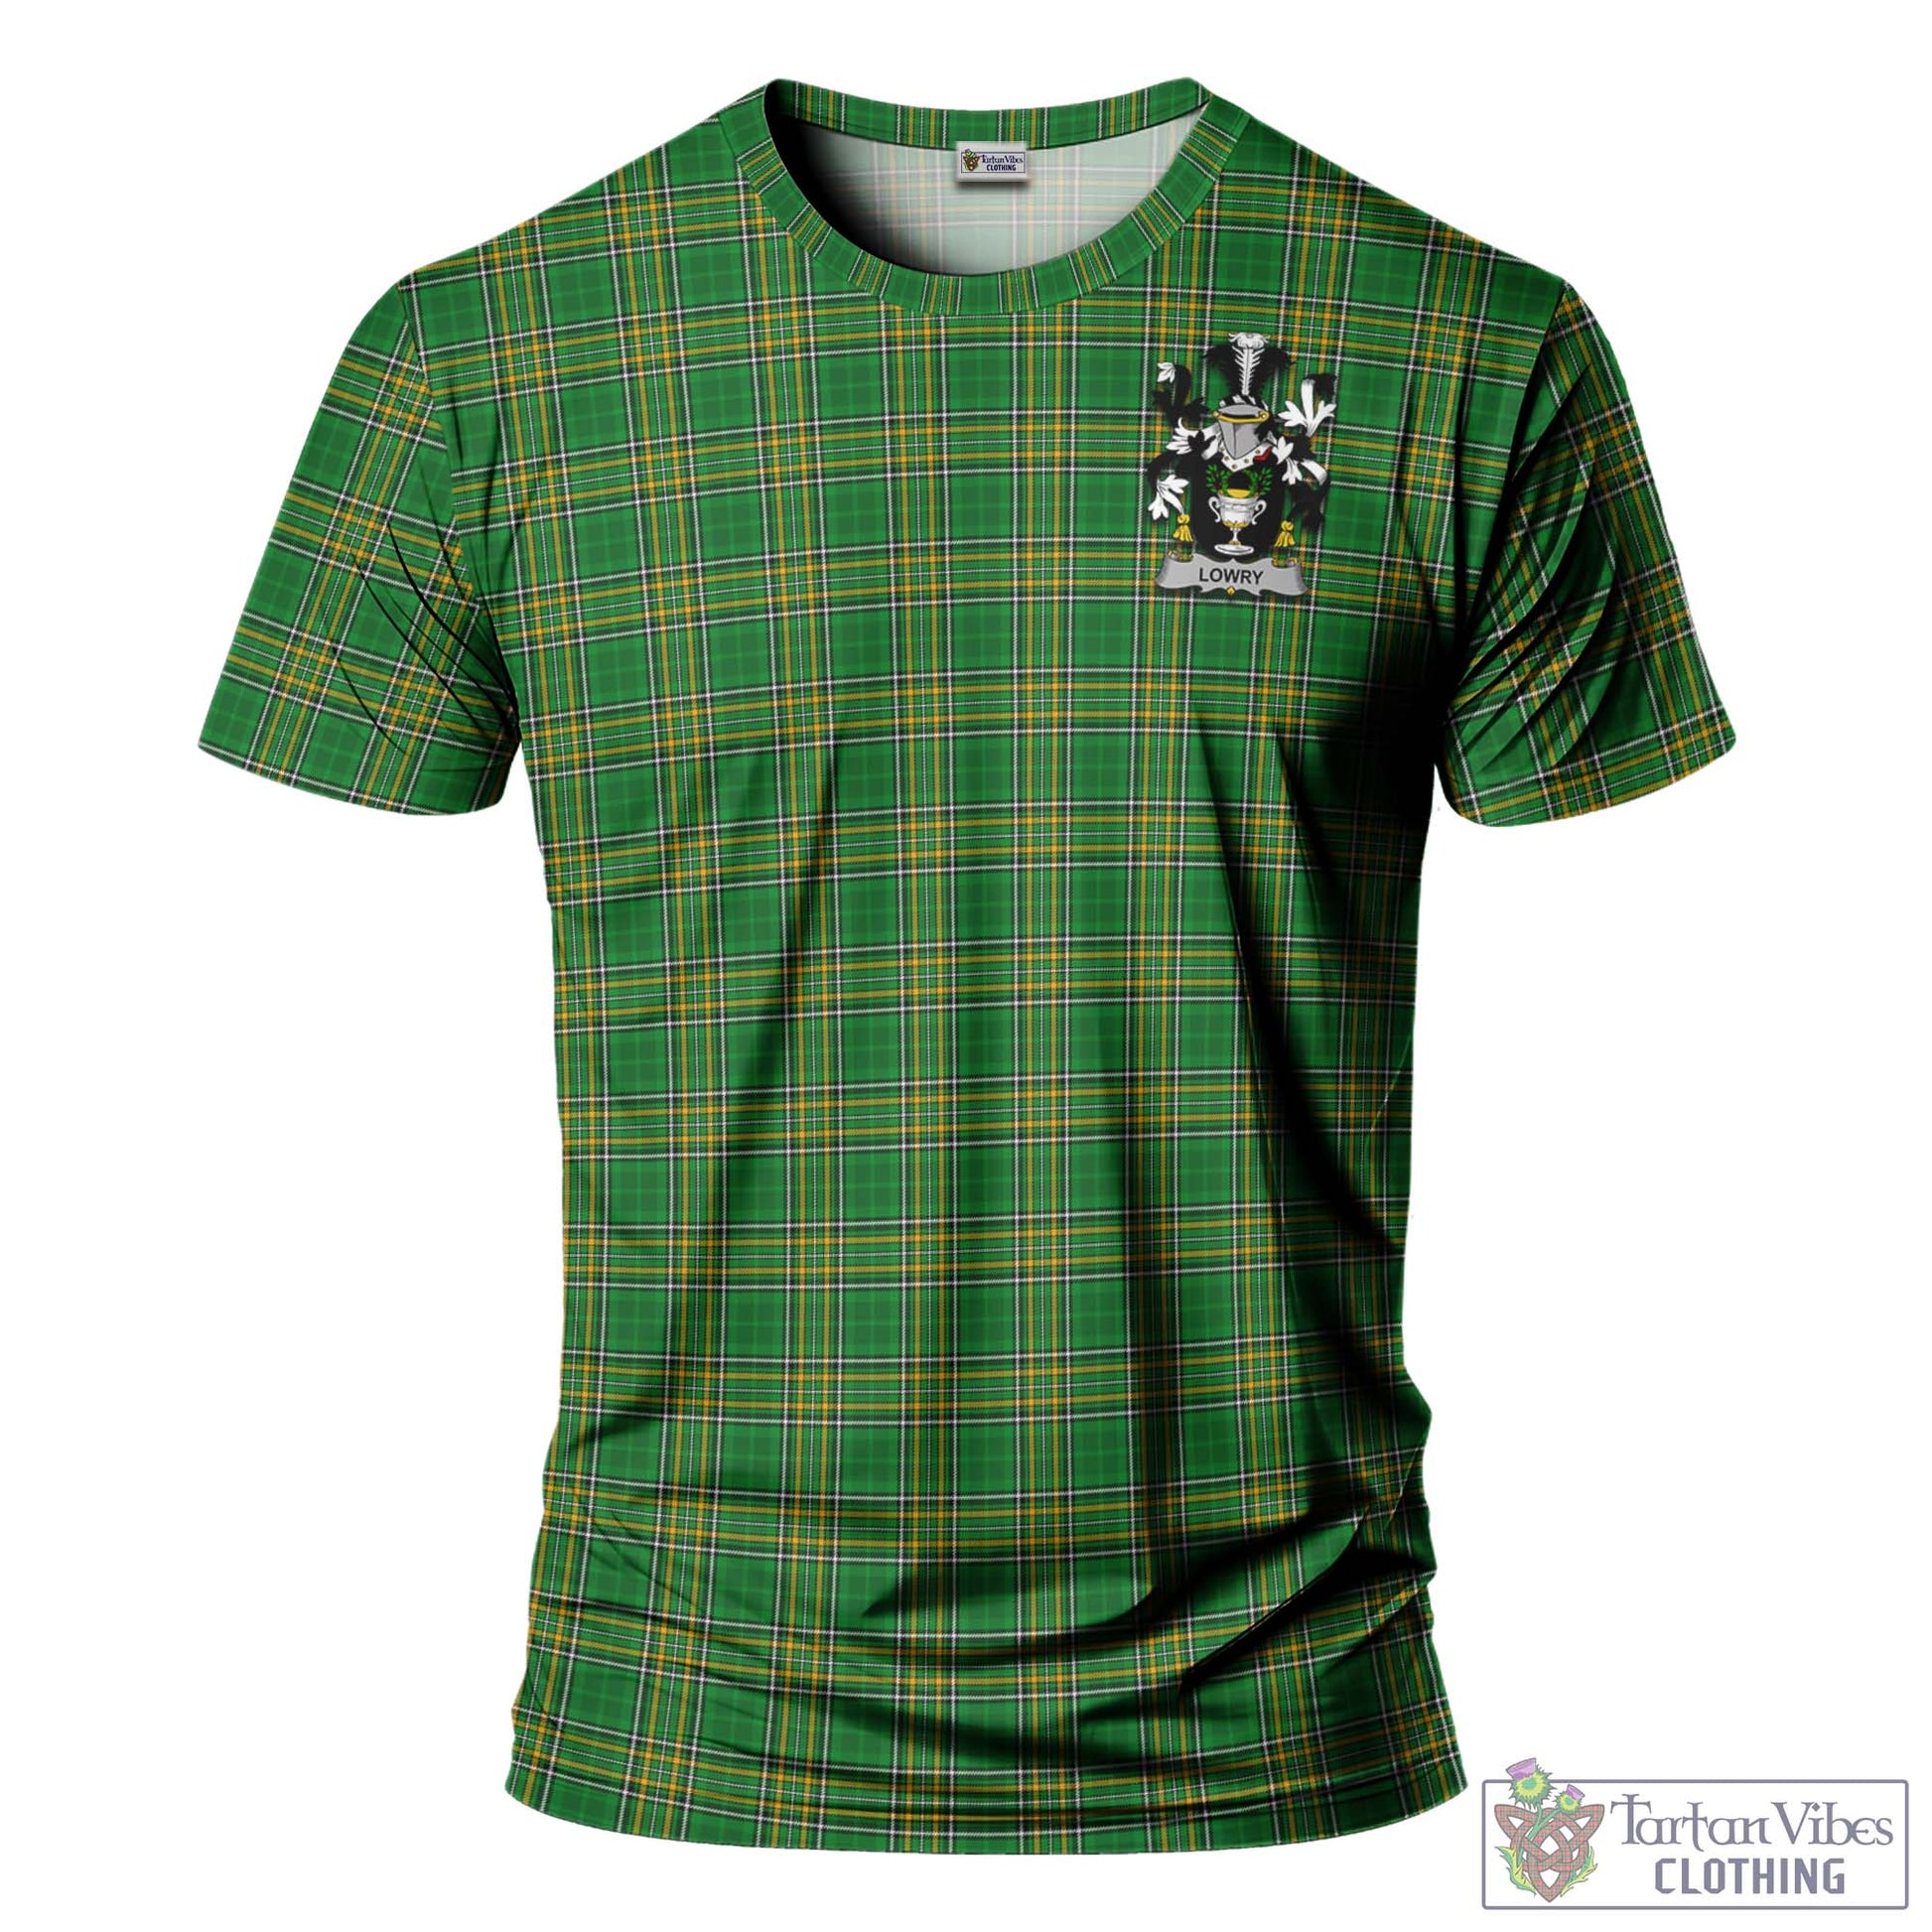 Tartan Vibes Clothing Lowry Ireland Clan Tartan T-Shirt with Family Seal